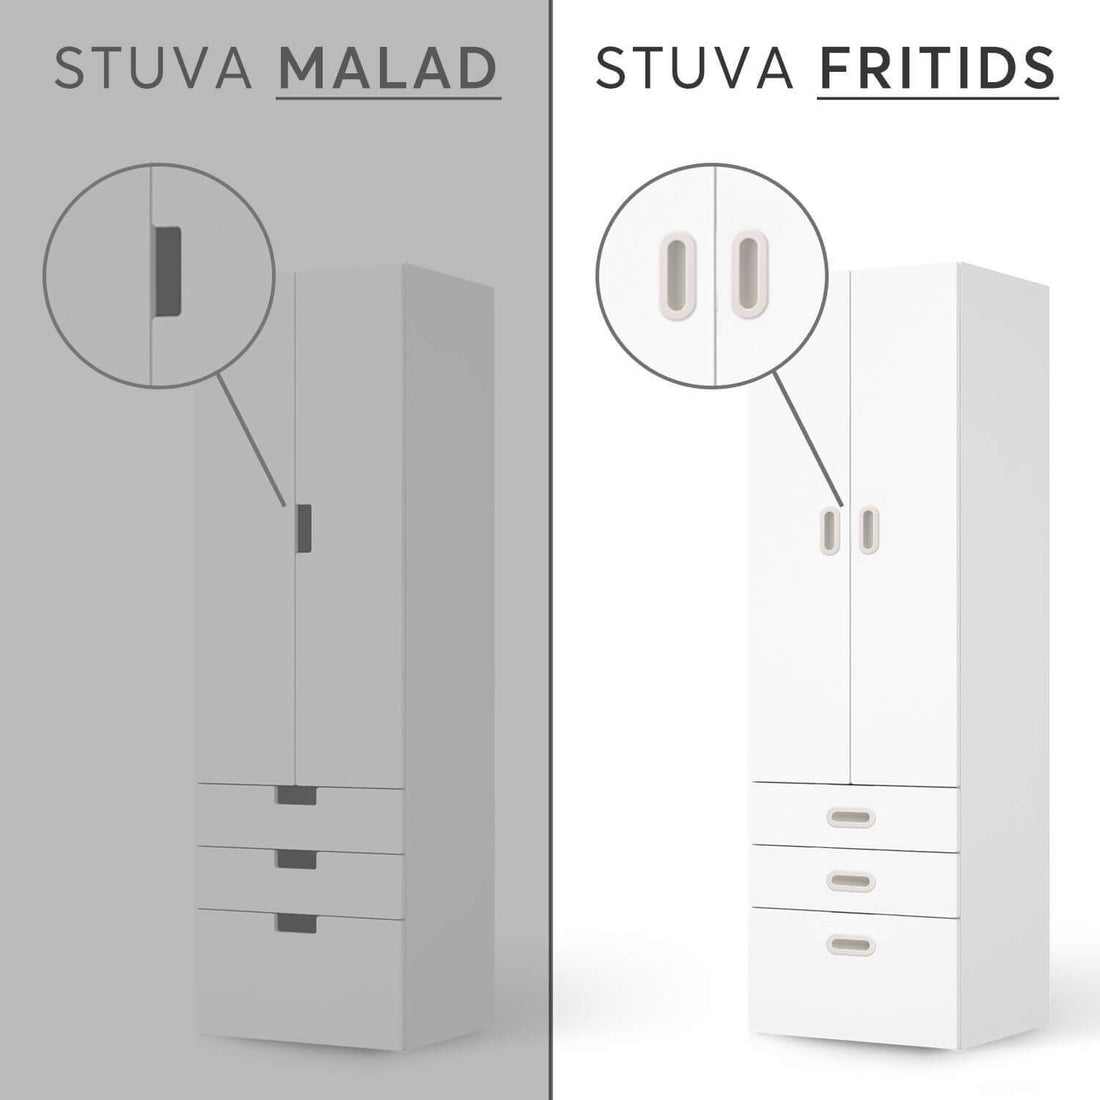 Vergleich IKEA Stuva Fritids / Malad - Tree and Birds 1